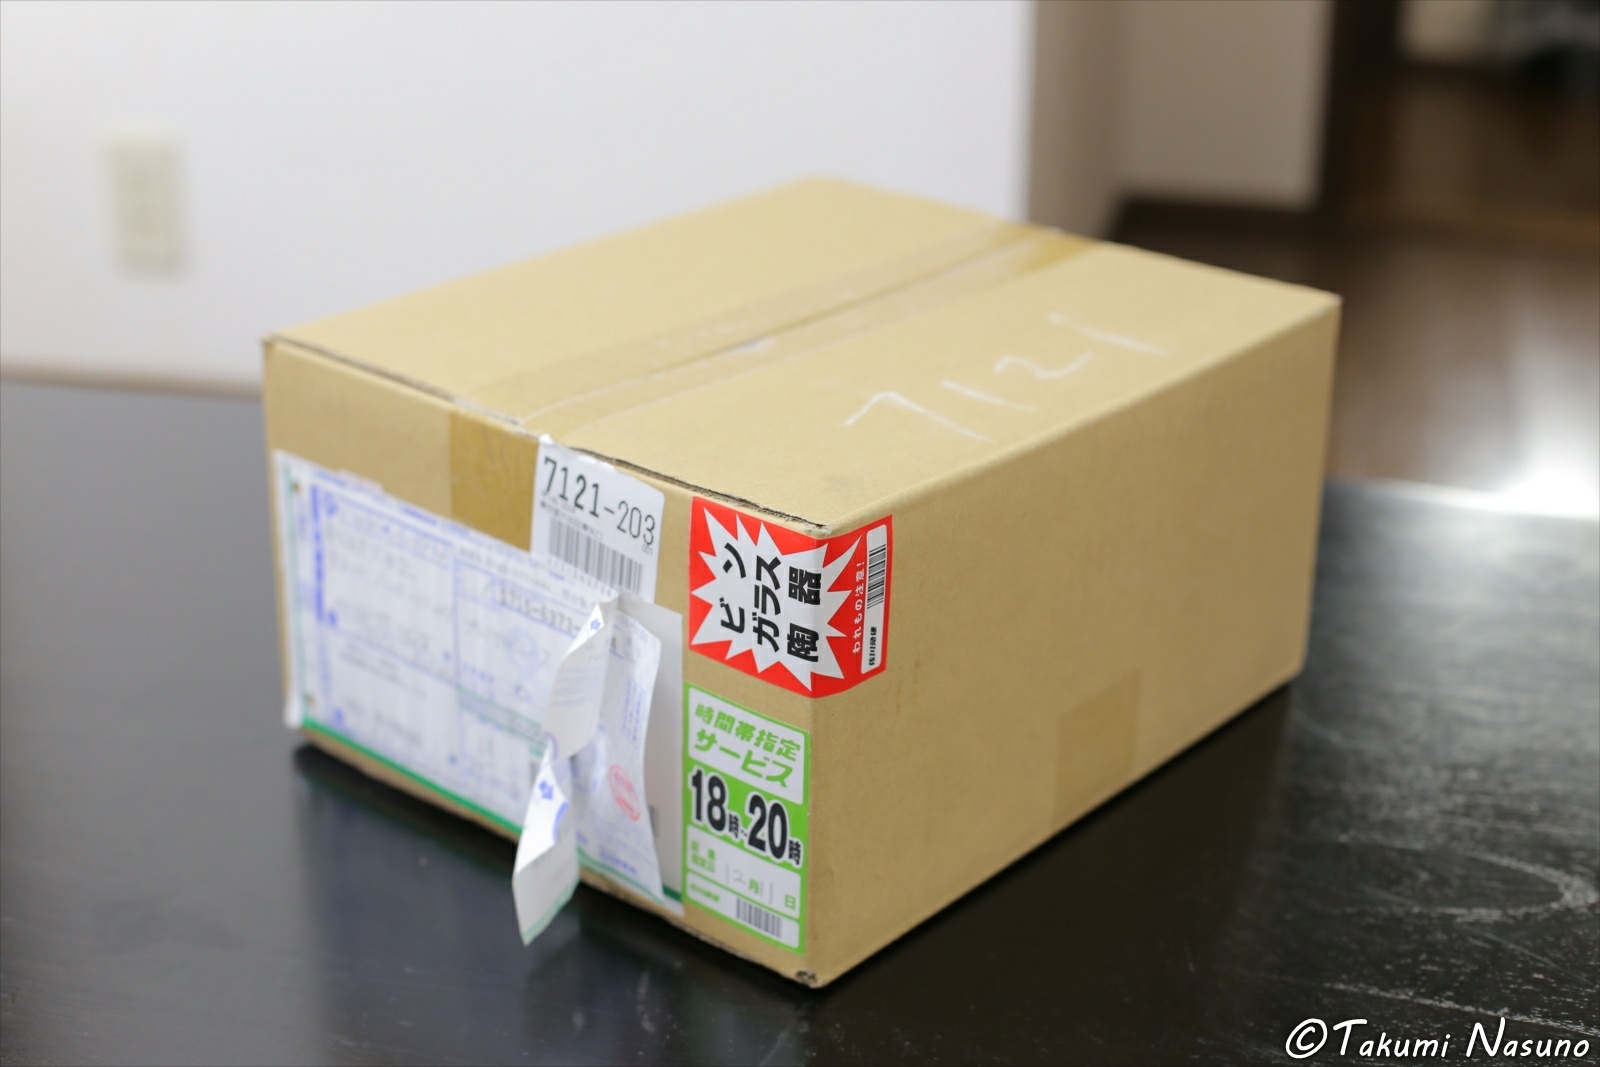 Osawa Grape Premium Juice From Yokote ViNERY in the Box